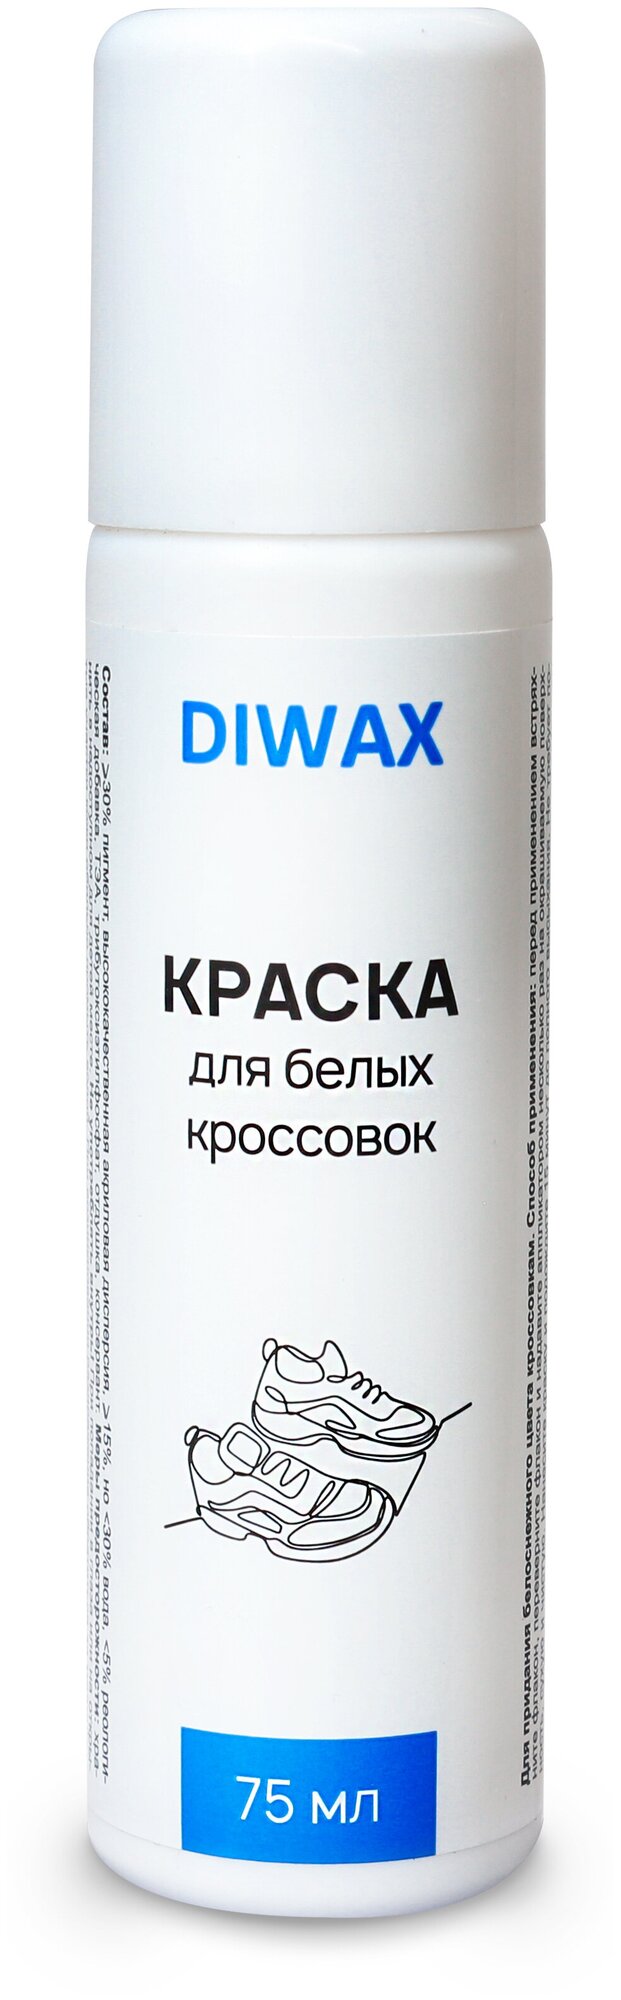 DIWAX Краска DIWAX для белых кроссовок и белой обуви, 75 мл - фотография № 8